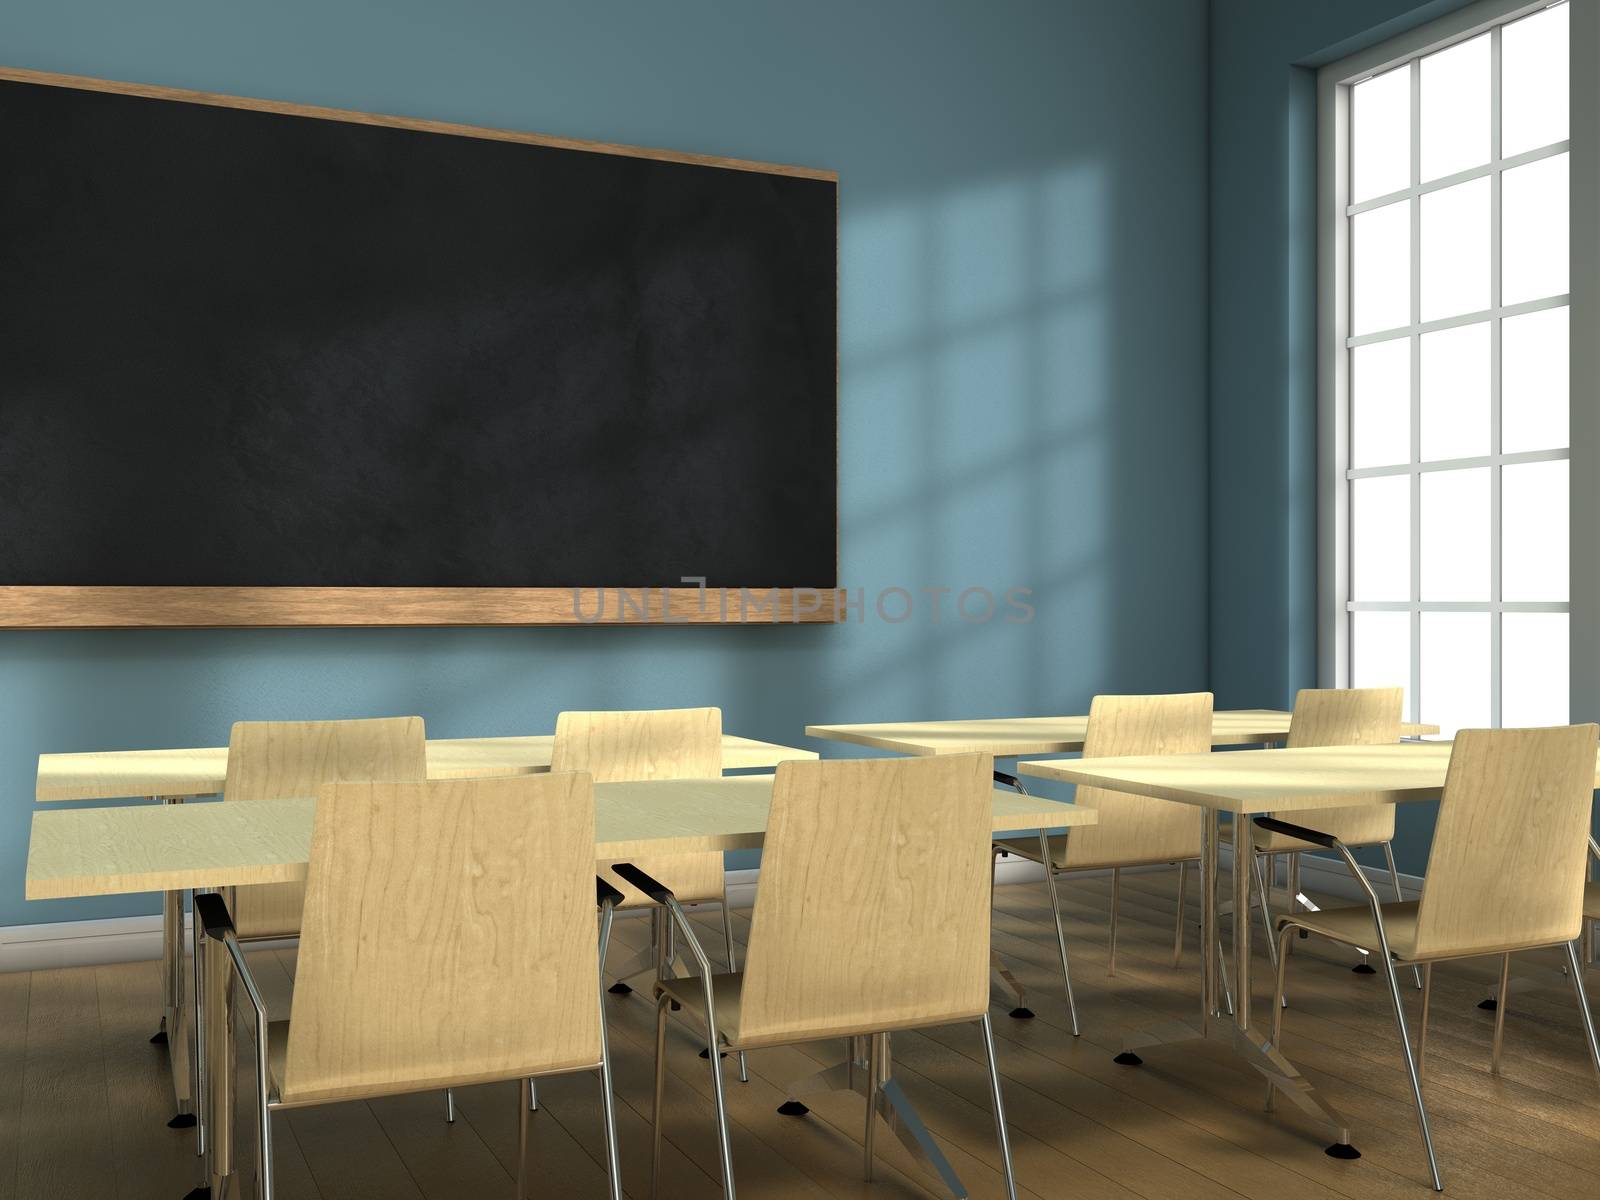 Classroom by dynamicfoto